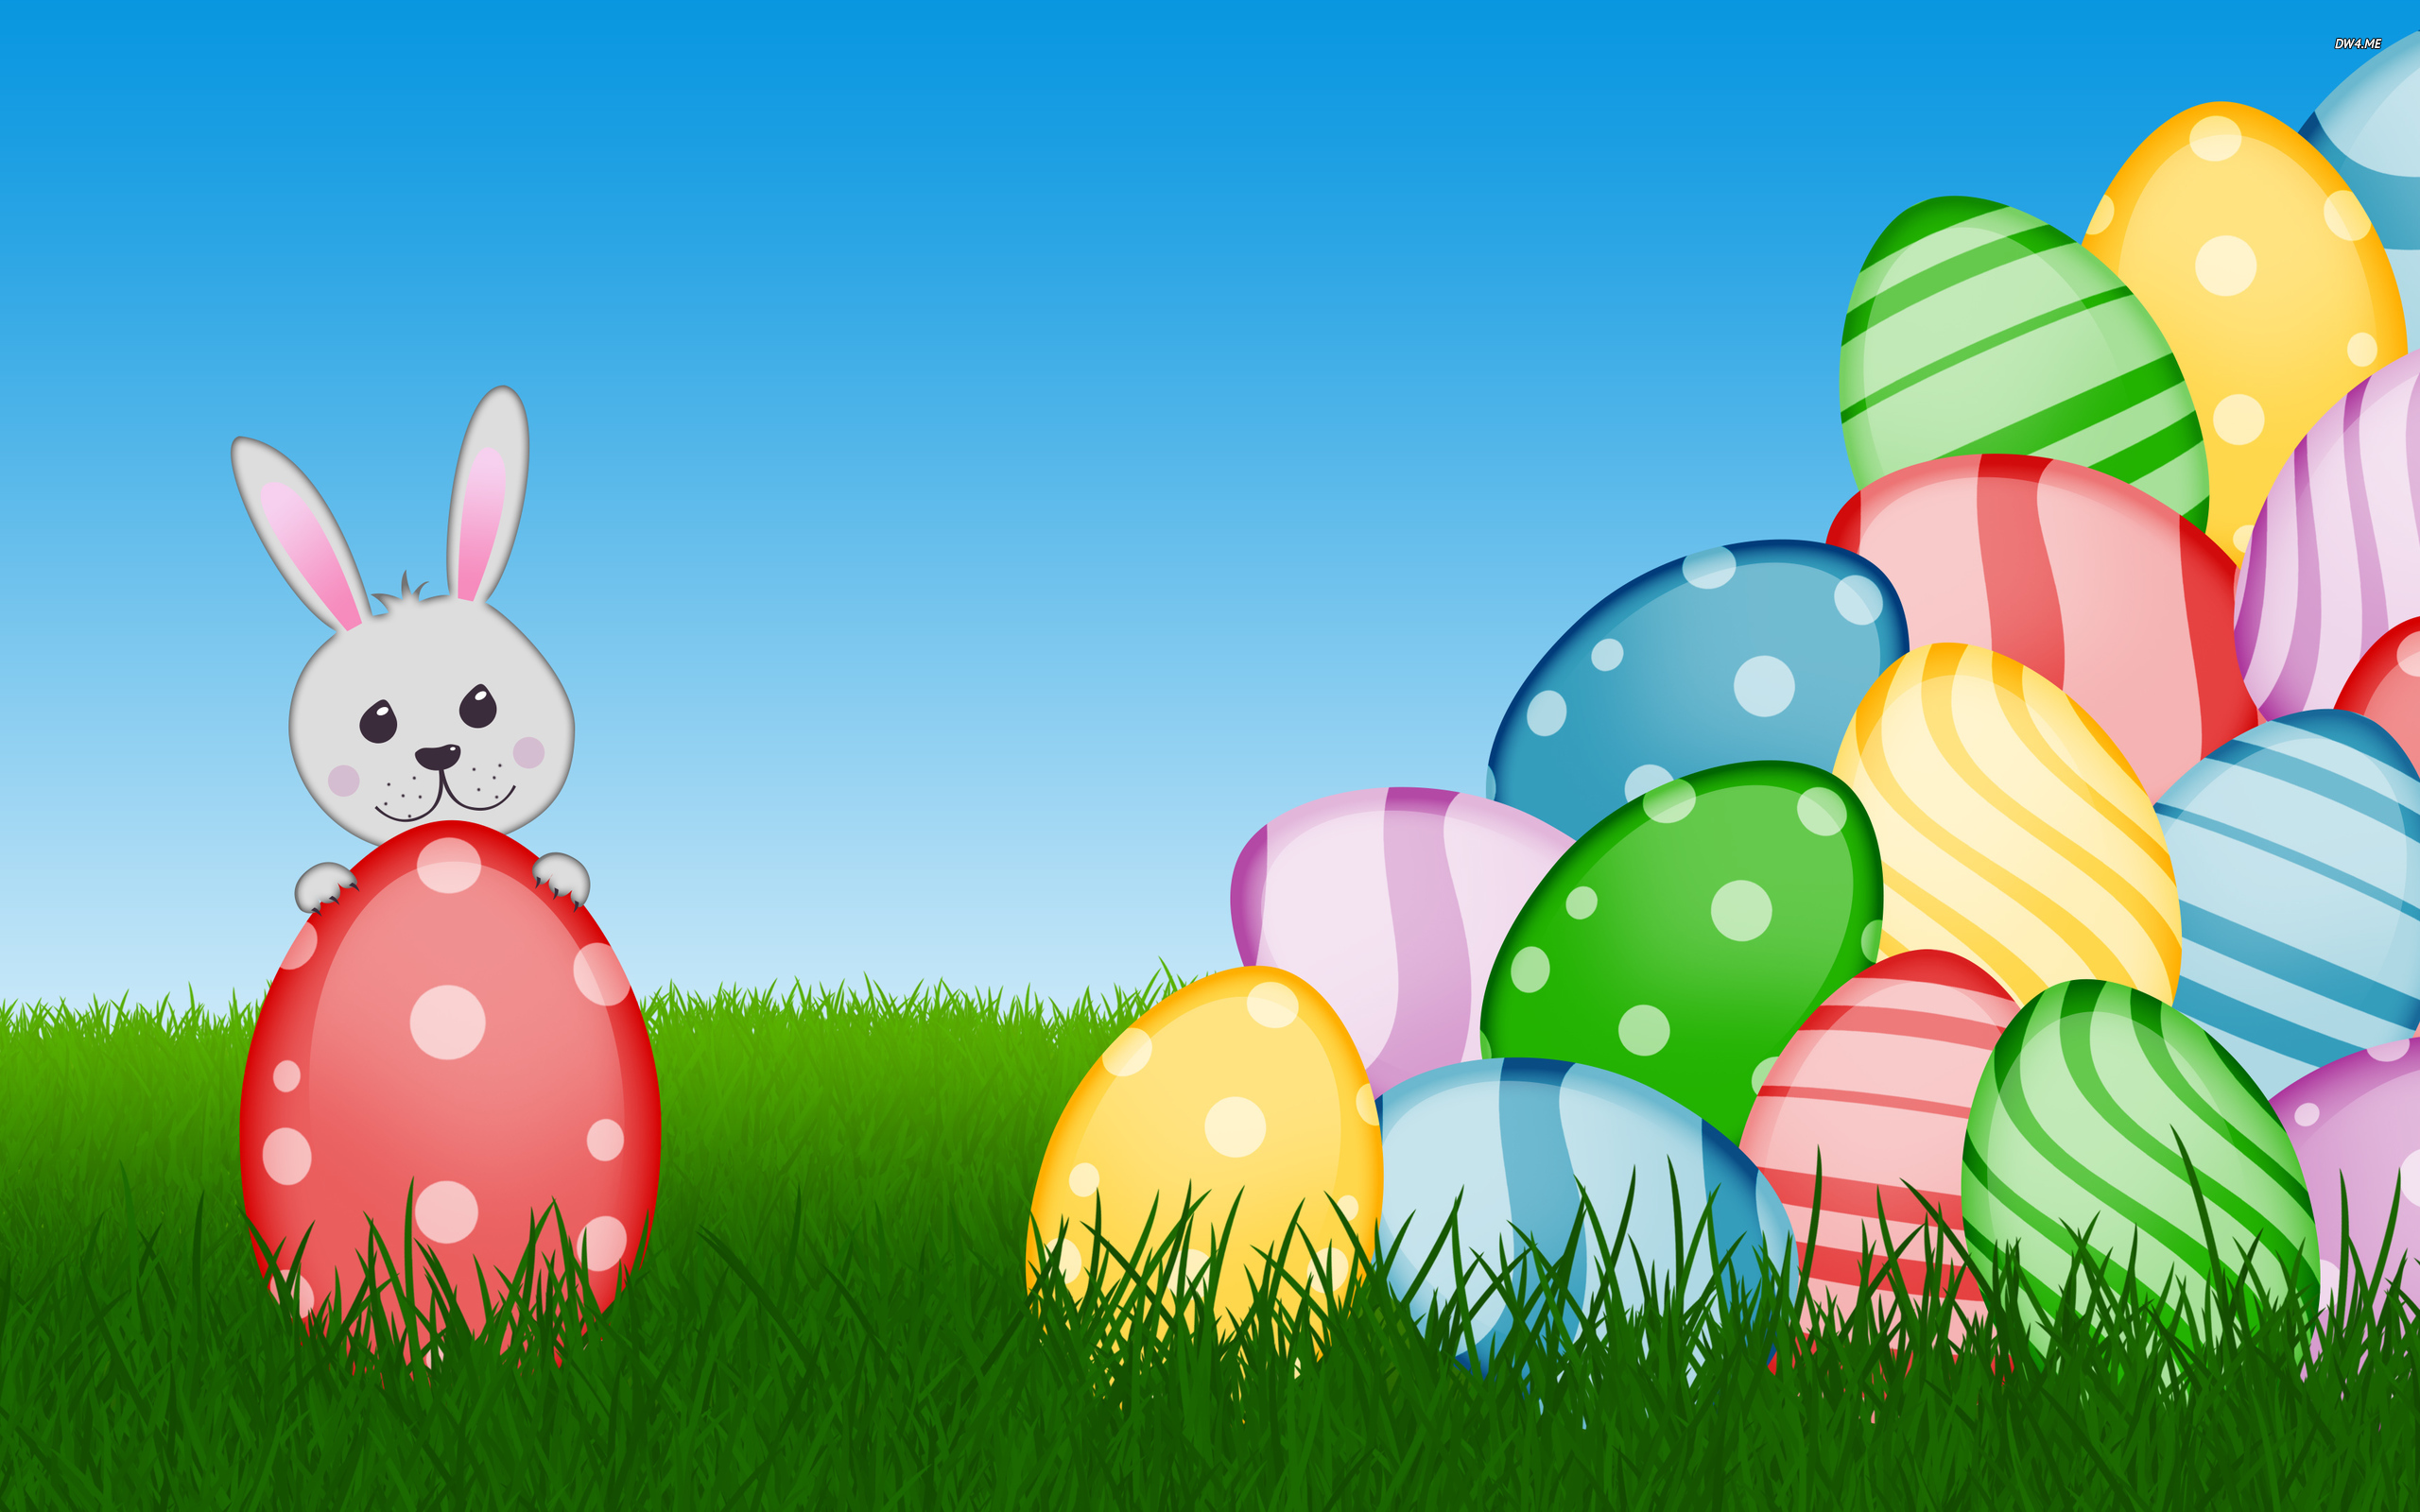 750269 Easter Bunny Images Stock Photos  Vectors  Shutterstock